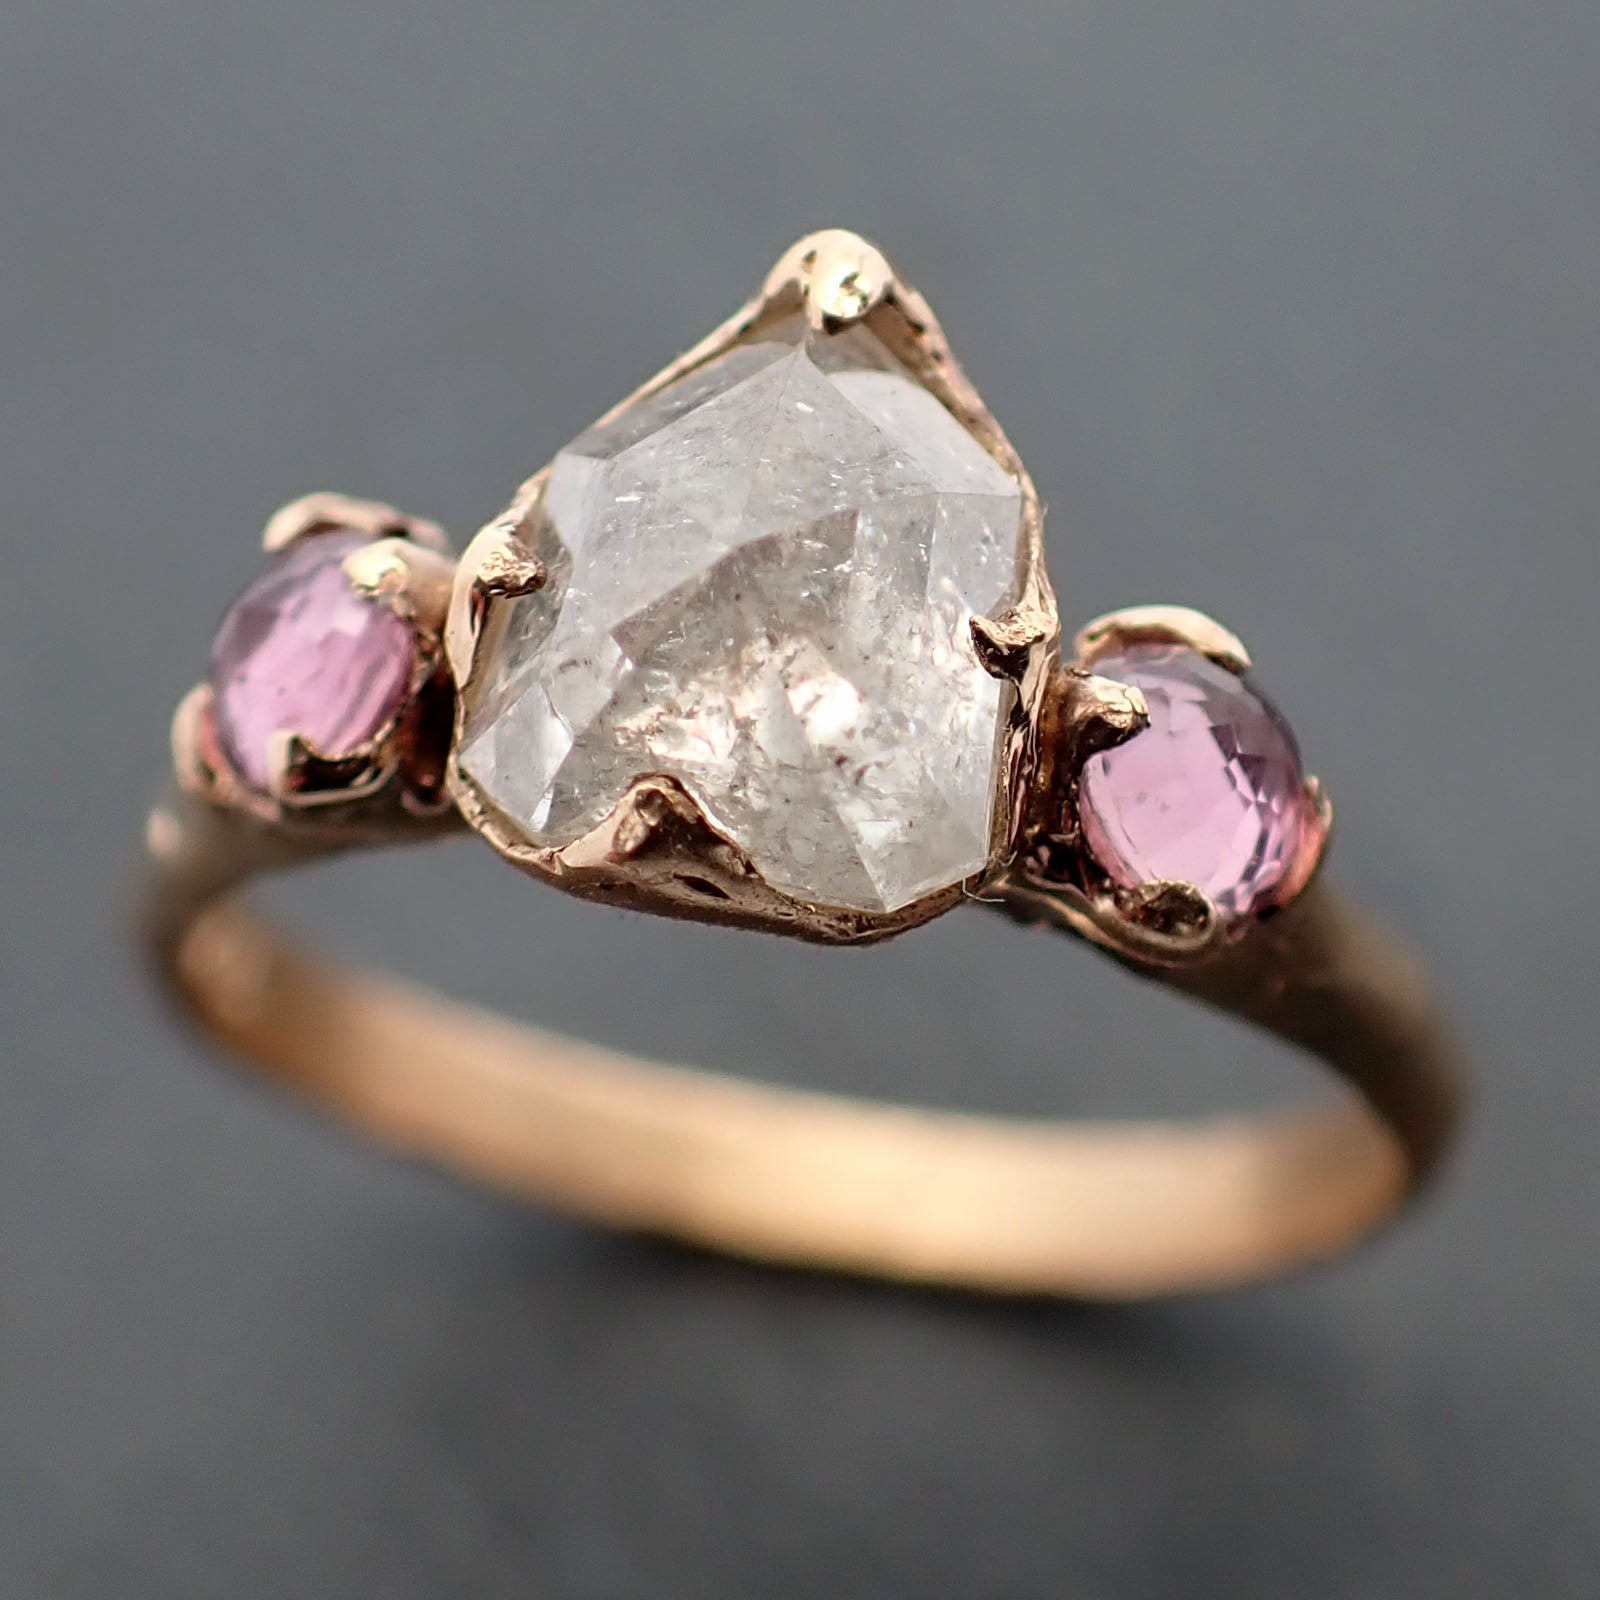 Fancy cut white Diamond and Rubies Engagement multi stone 18k yellow Gold Wedding Set Ring Rough Diamond Ring byAngeline 3345